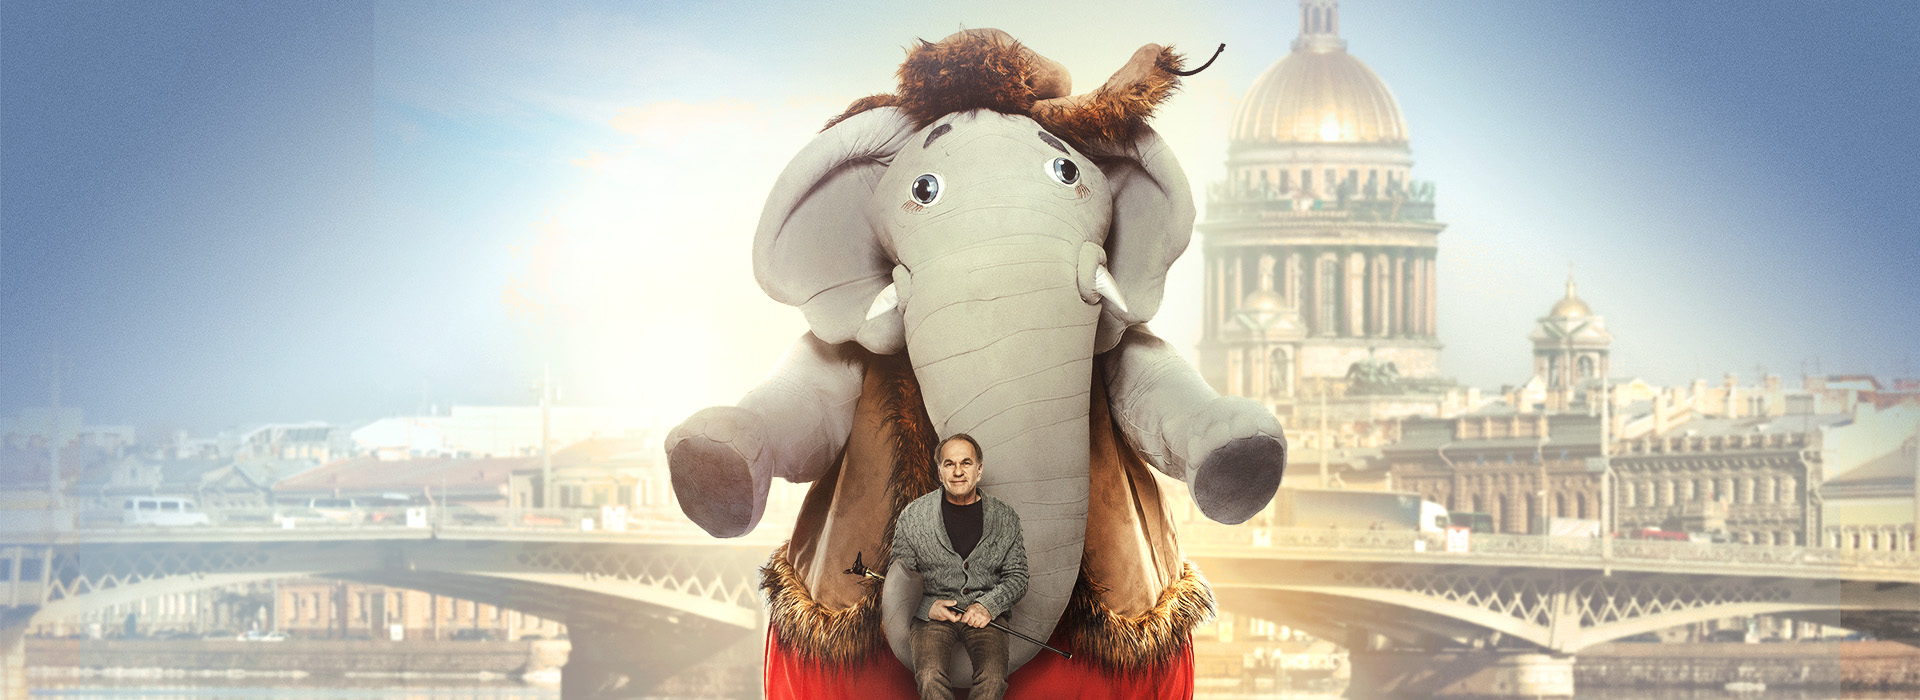 Movie poster Elefant